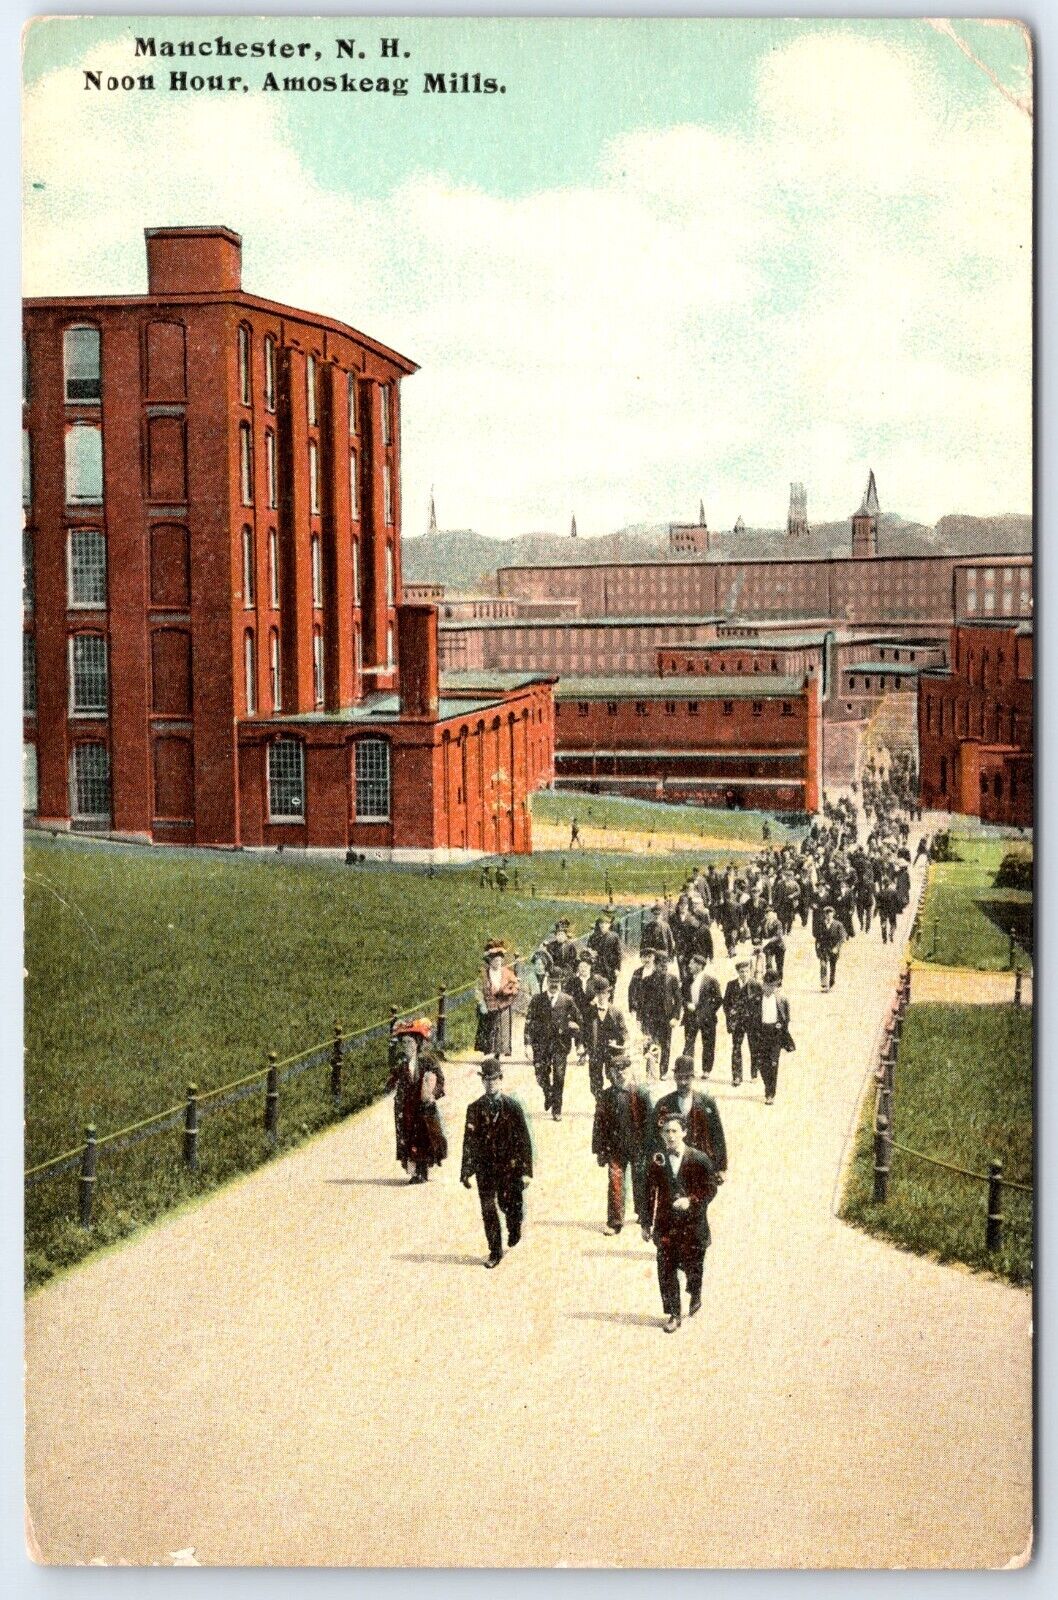 Manchester NH noon hour amoskeag mills unposted vintage postcard 